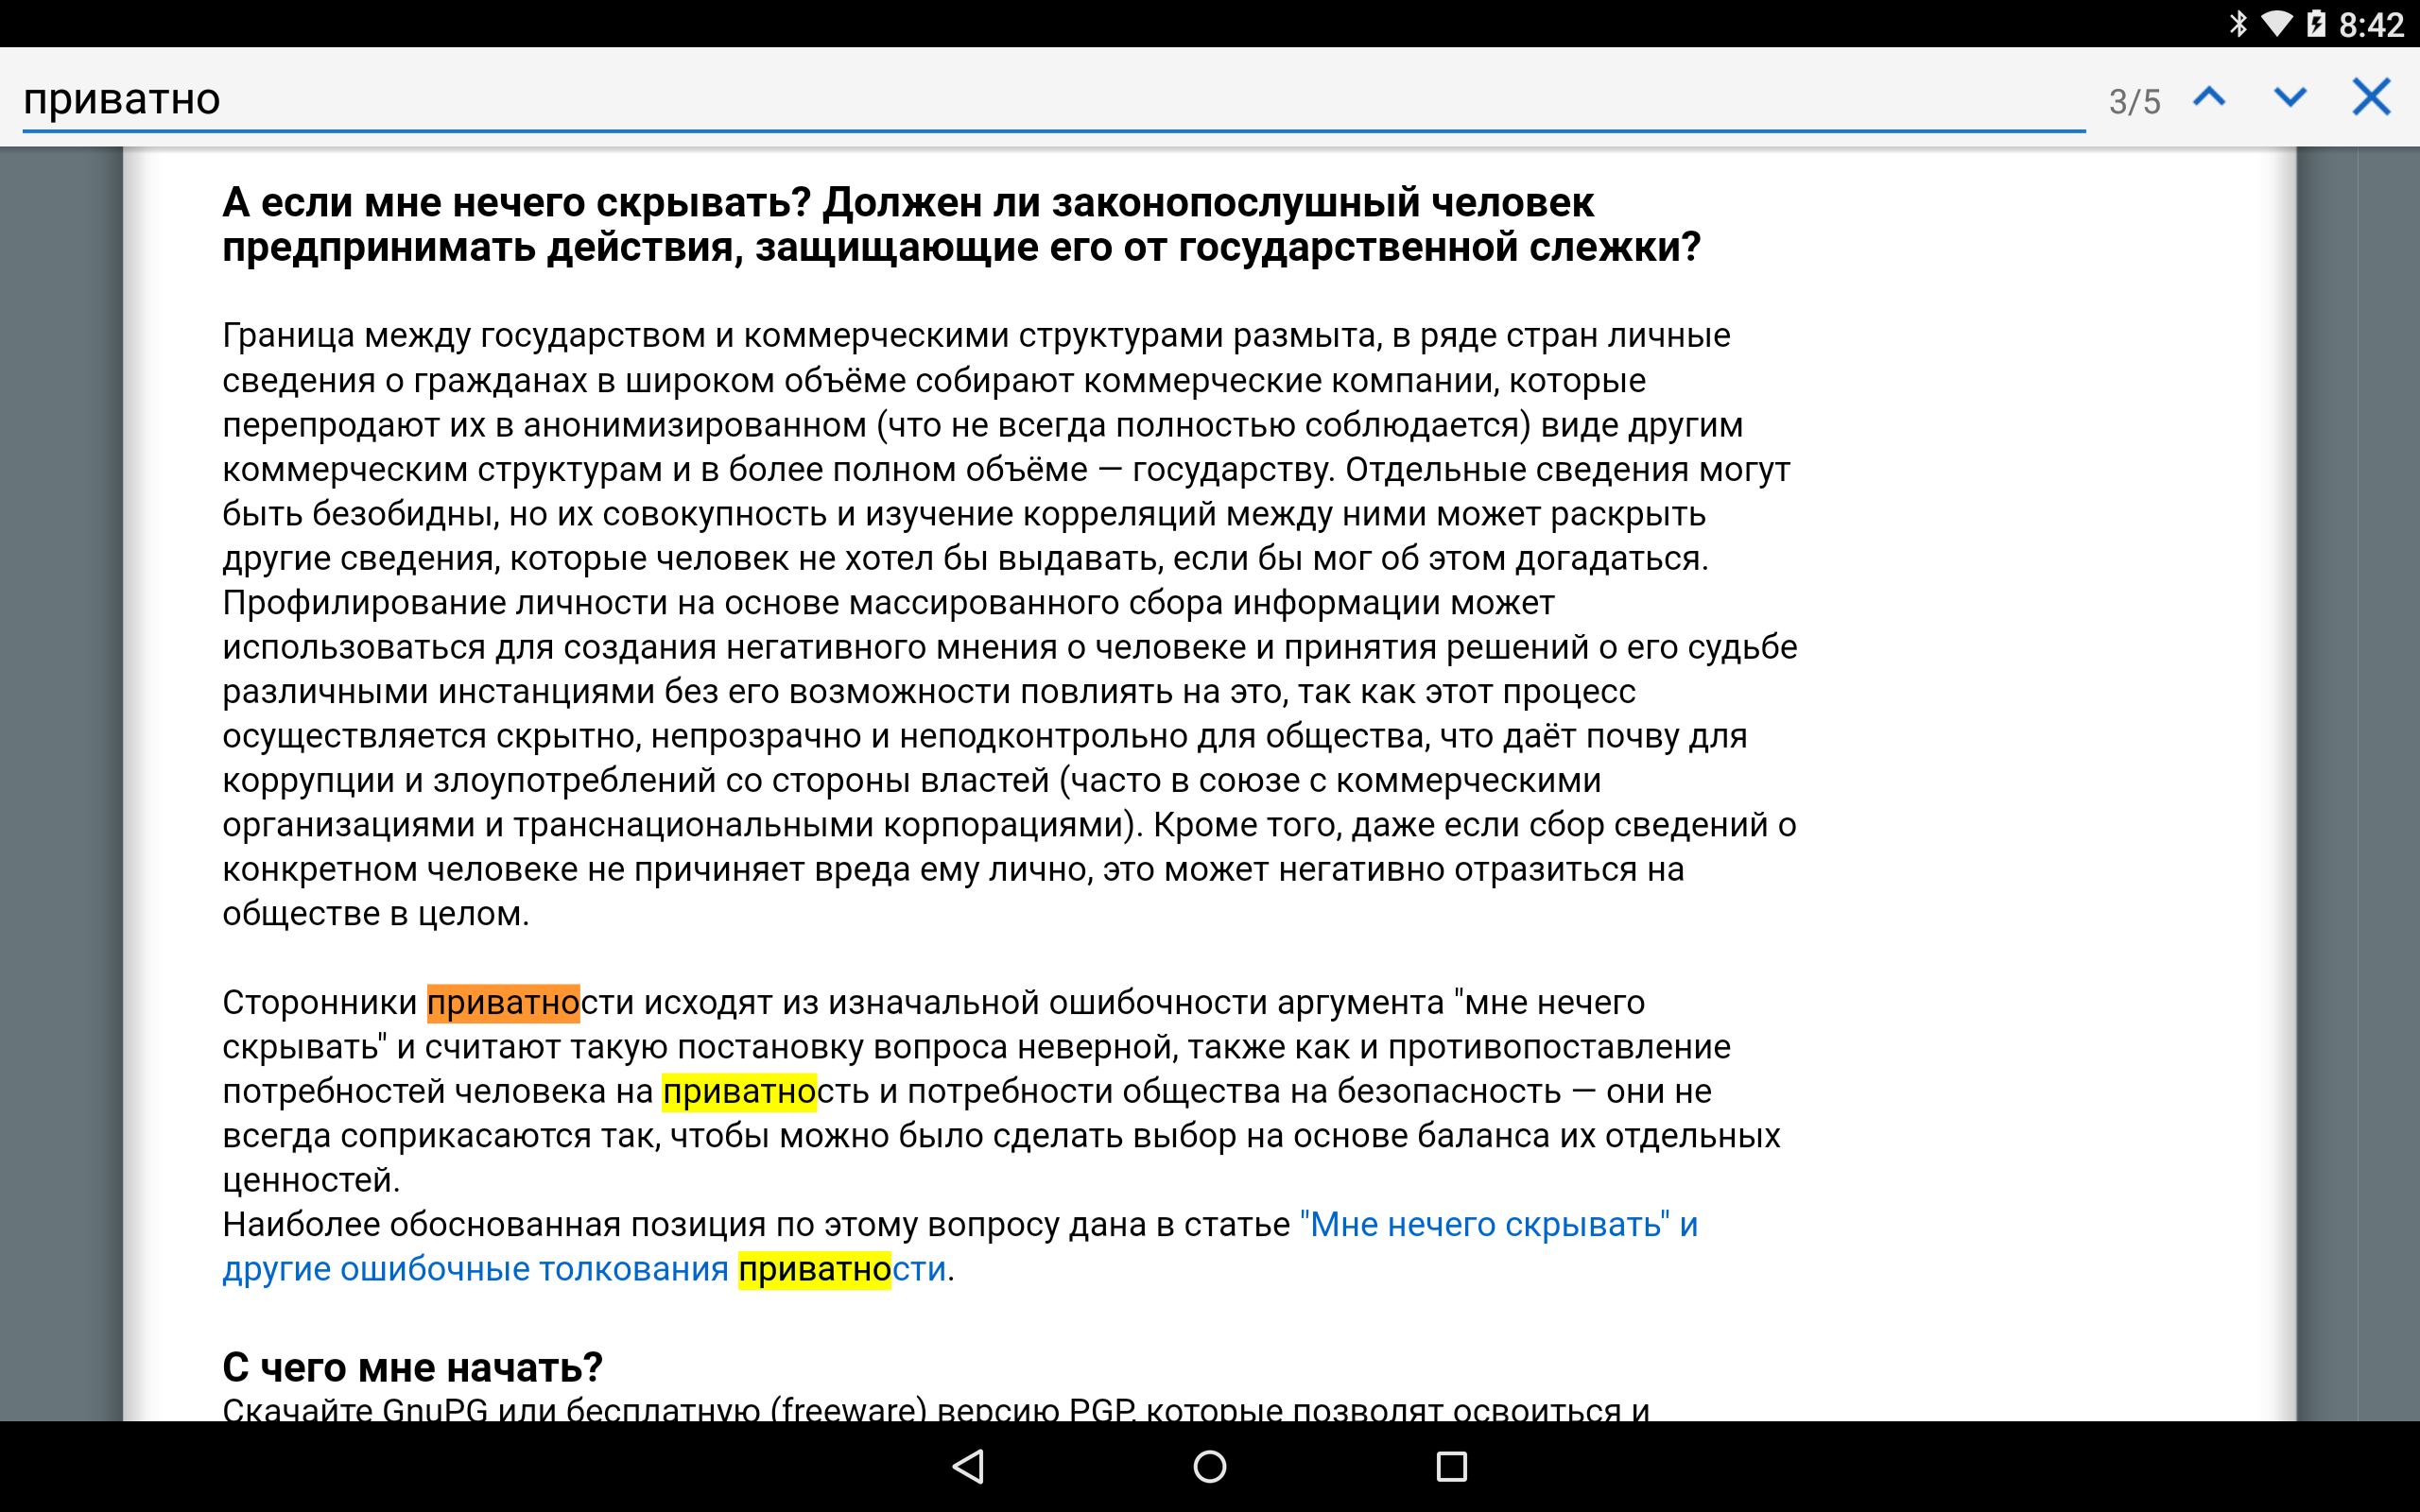 fastlane/metadata/android/ru/images/tenInchScreenshots/02-FindonPage.png